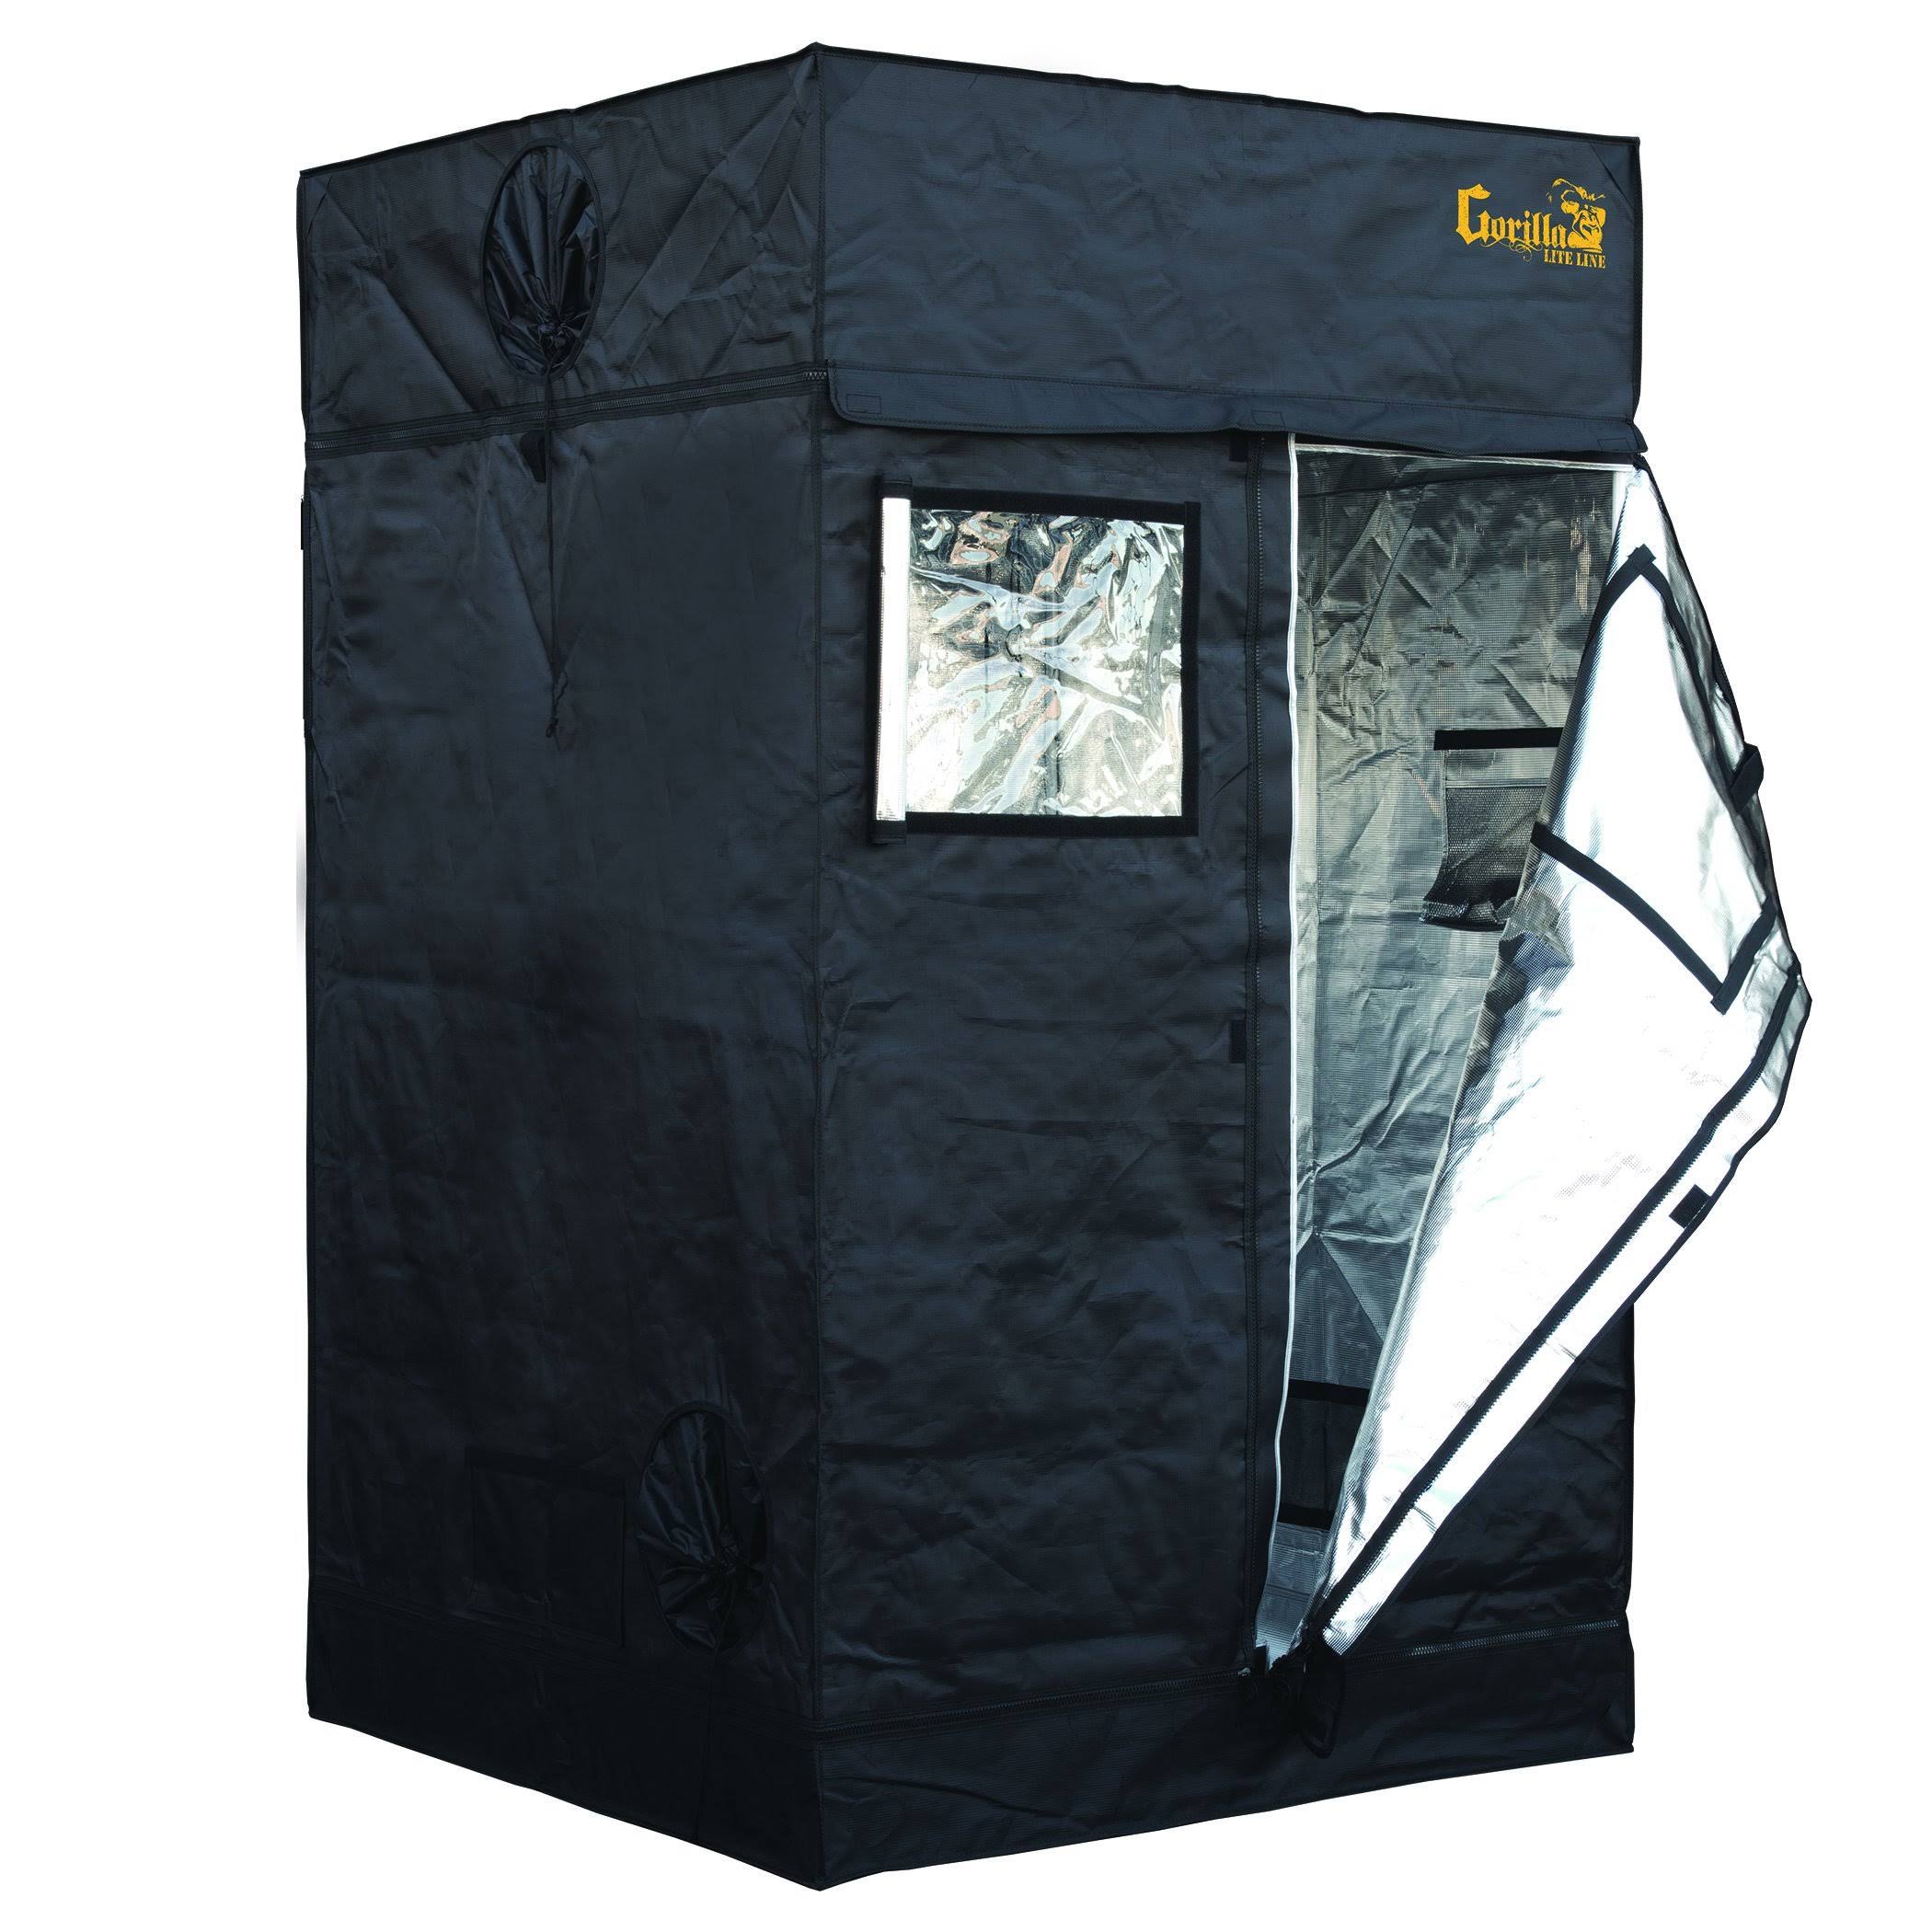 Gorilla Grow Lite Tent - 4' x 4'